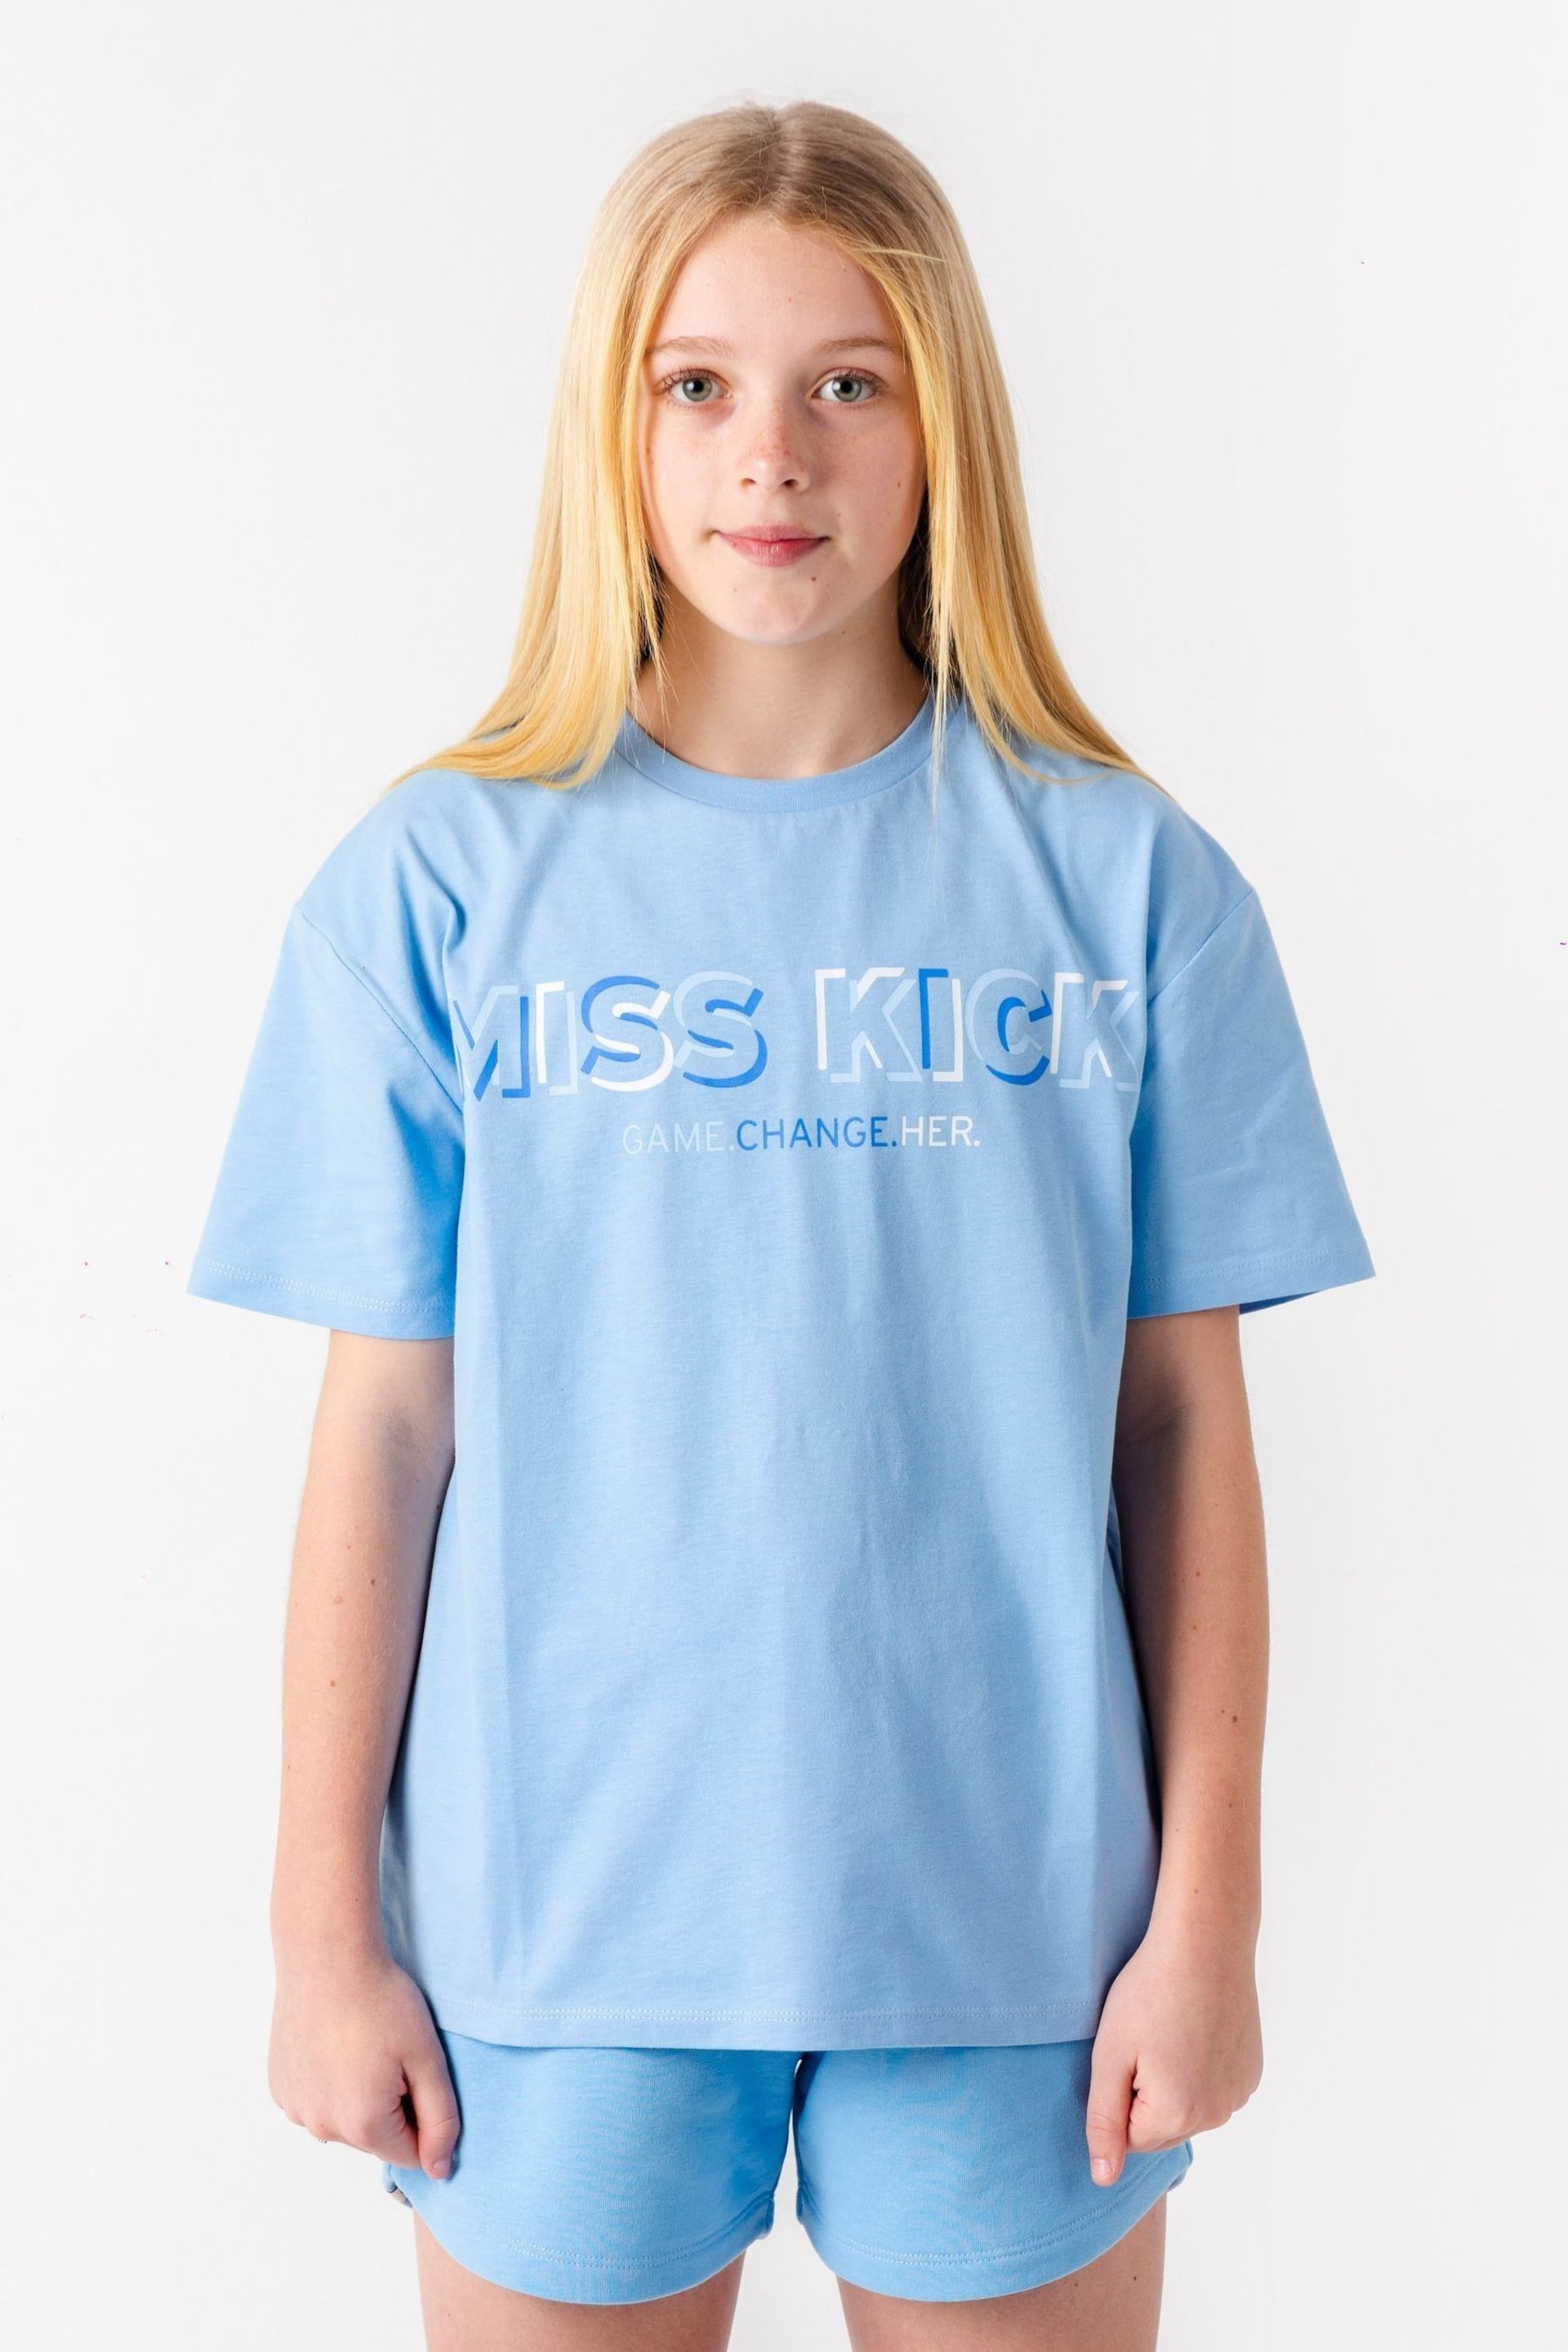 Miss Kick Girls Mary White T-Shirt - Image 1 of 4